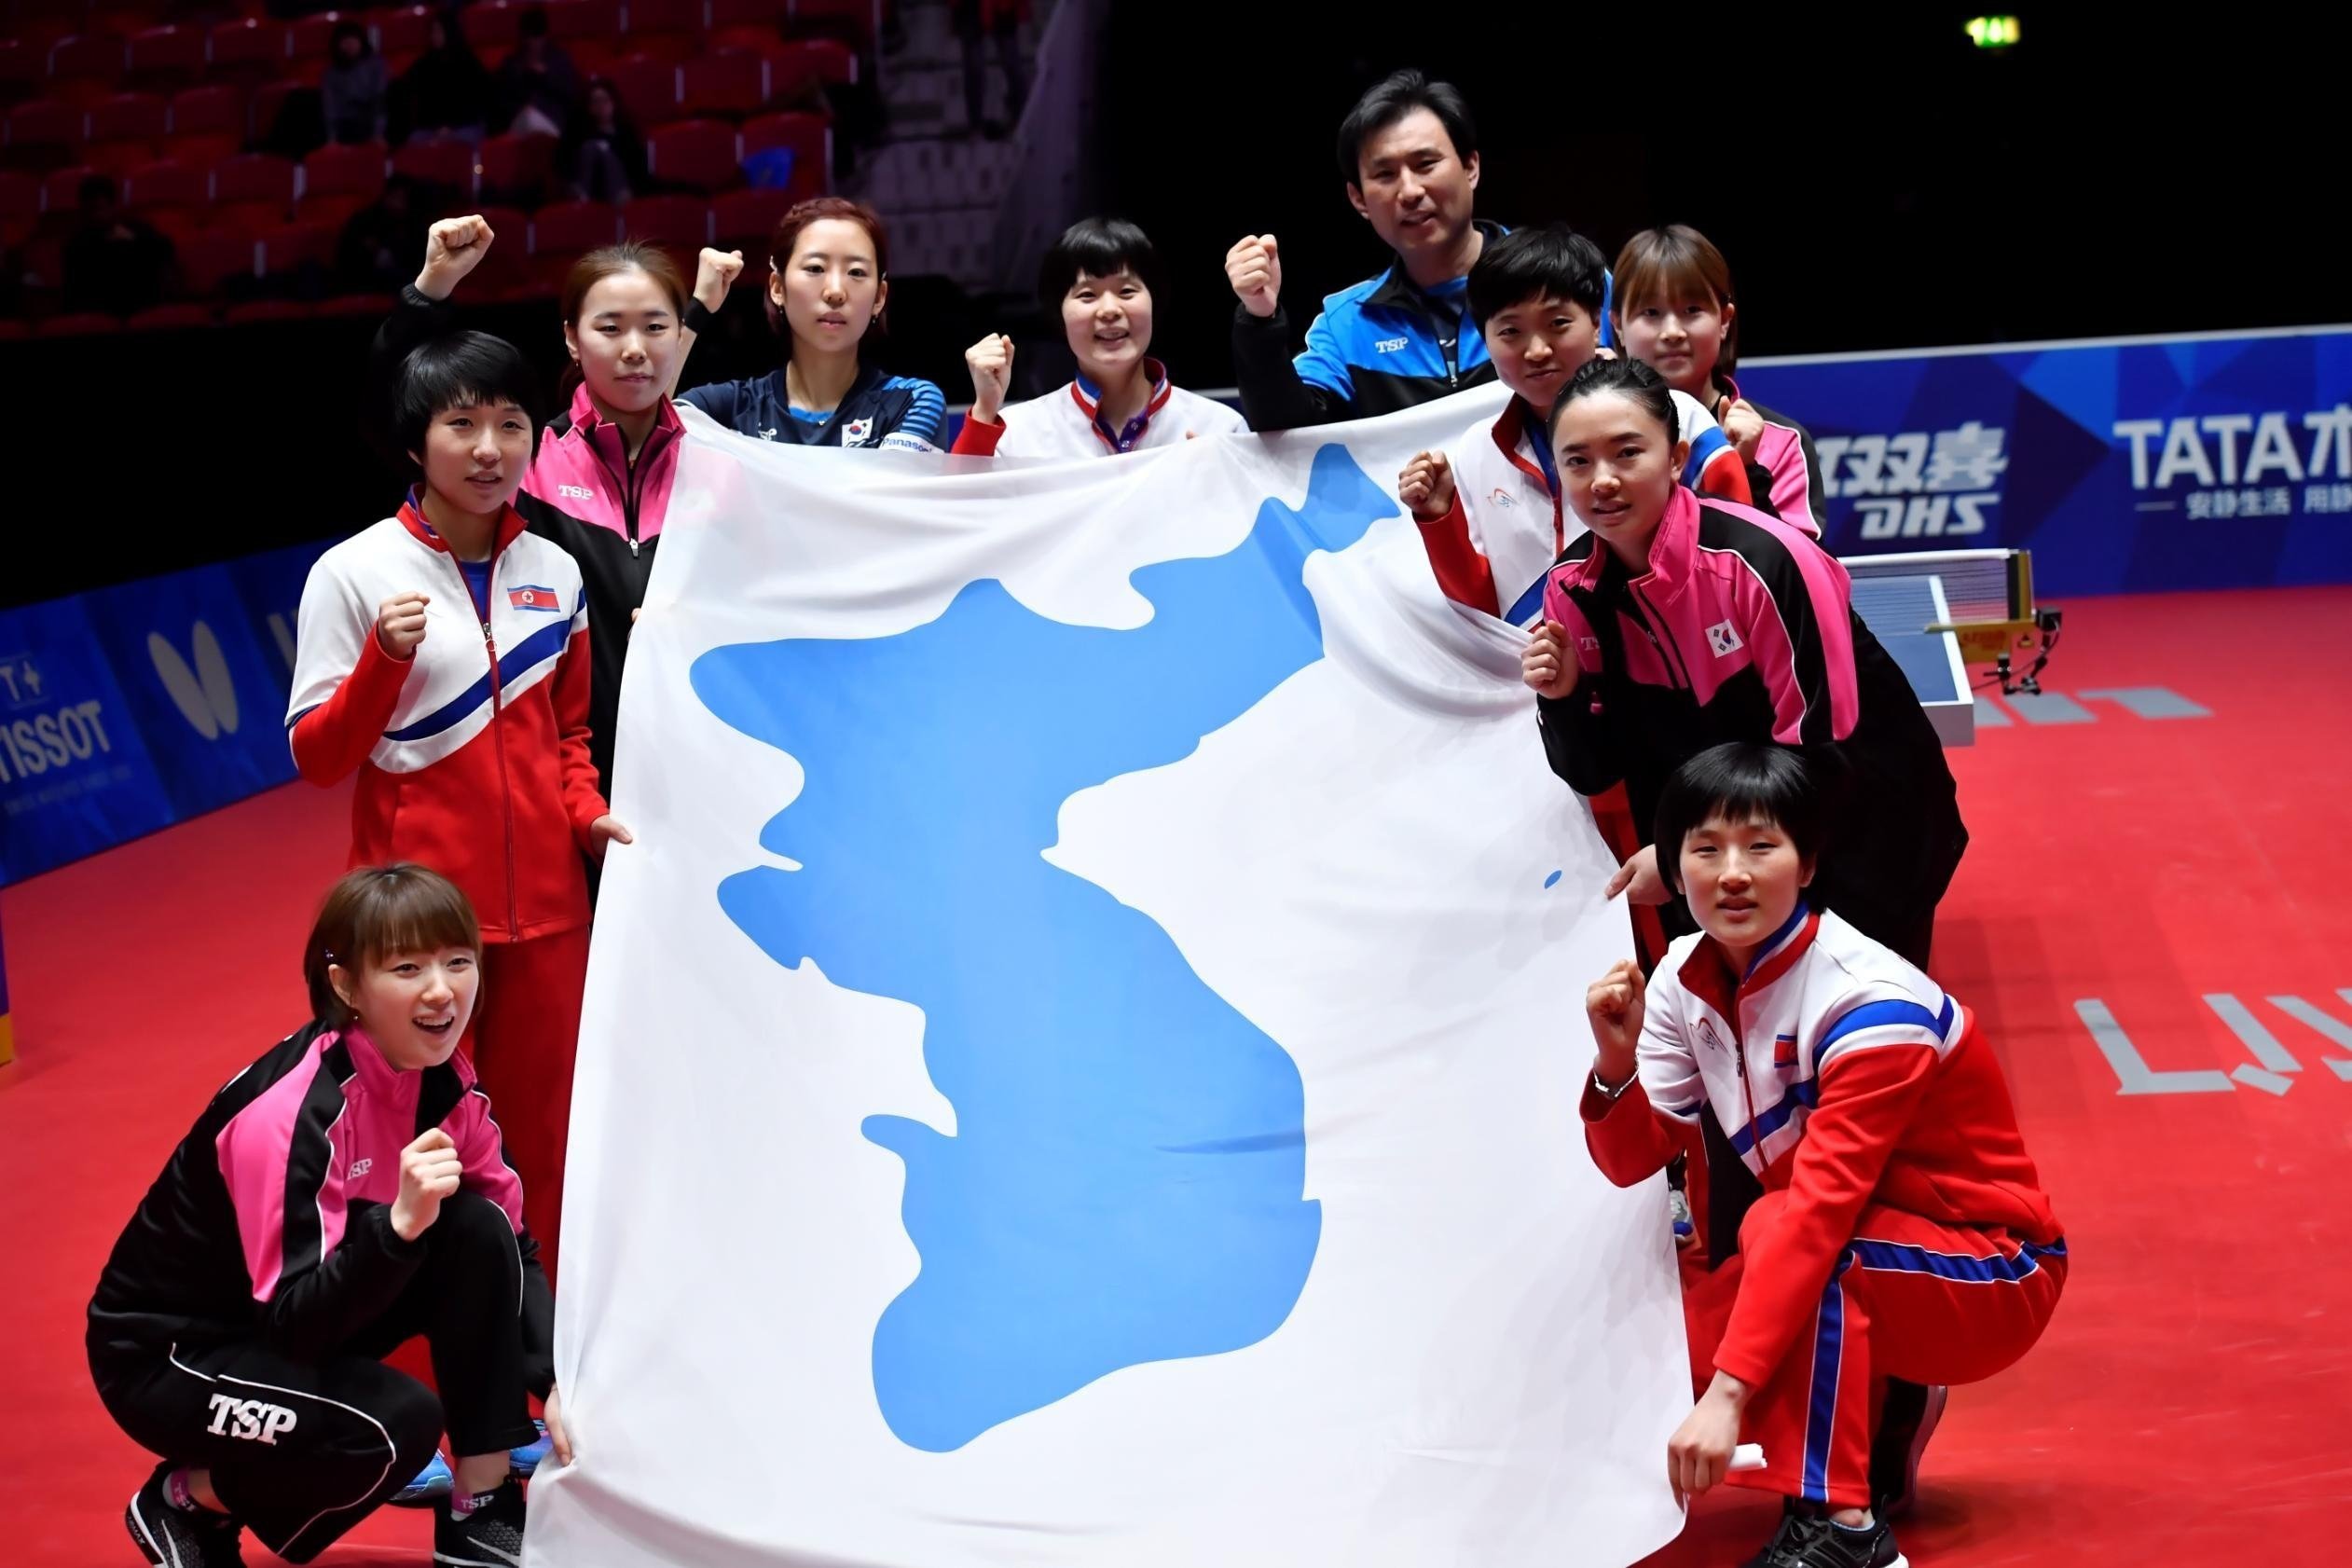 North and South Korea teams unite at table tennis world championships